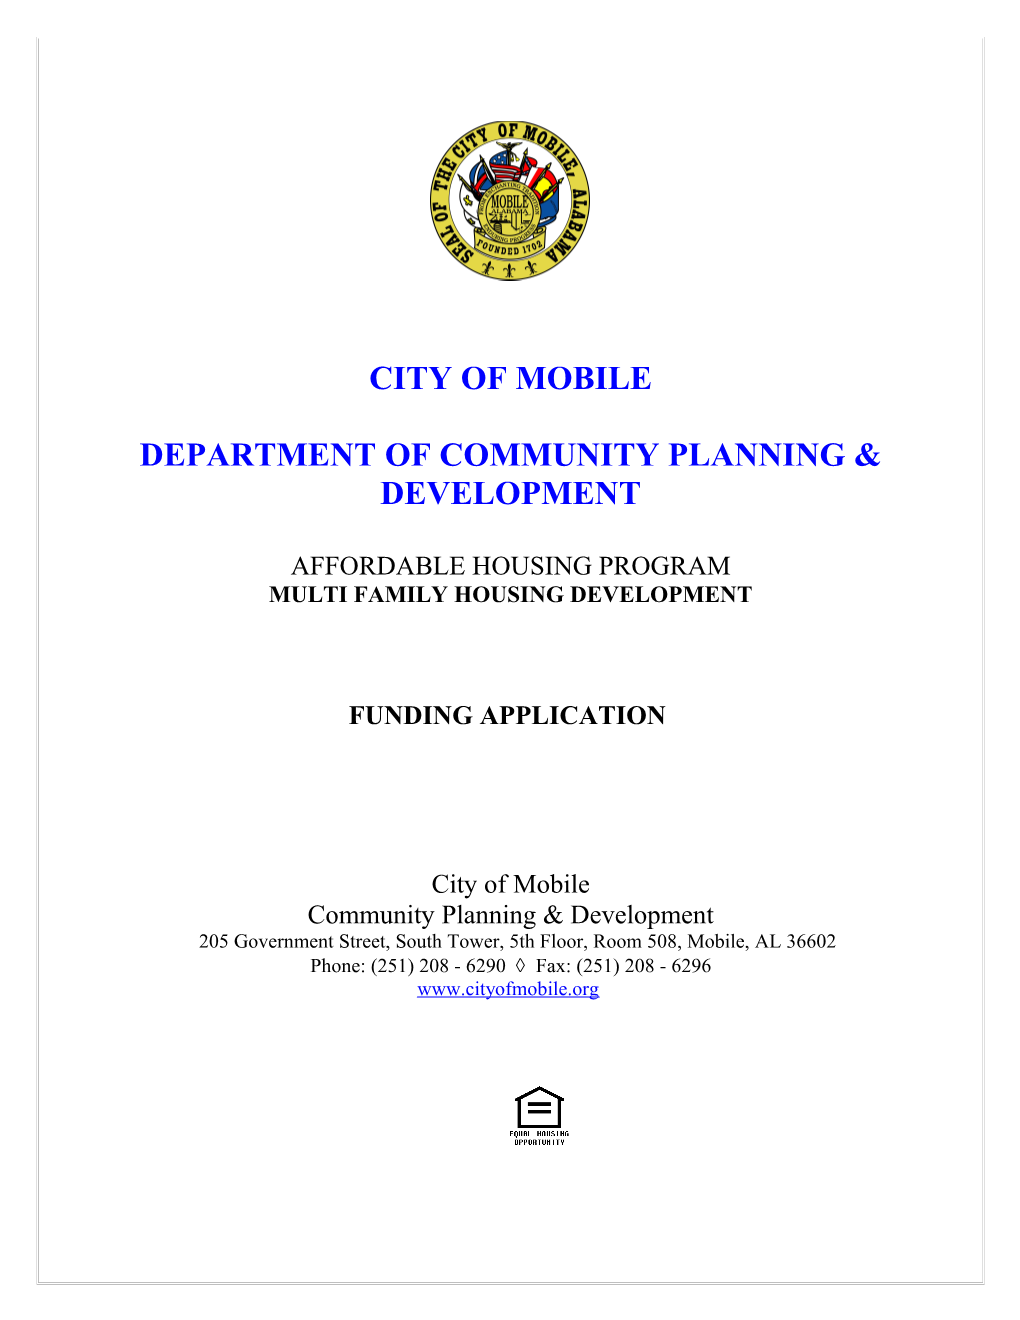 Department of Community Planning & Development